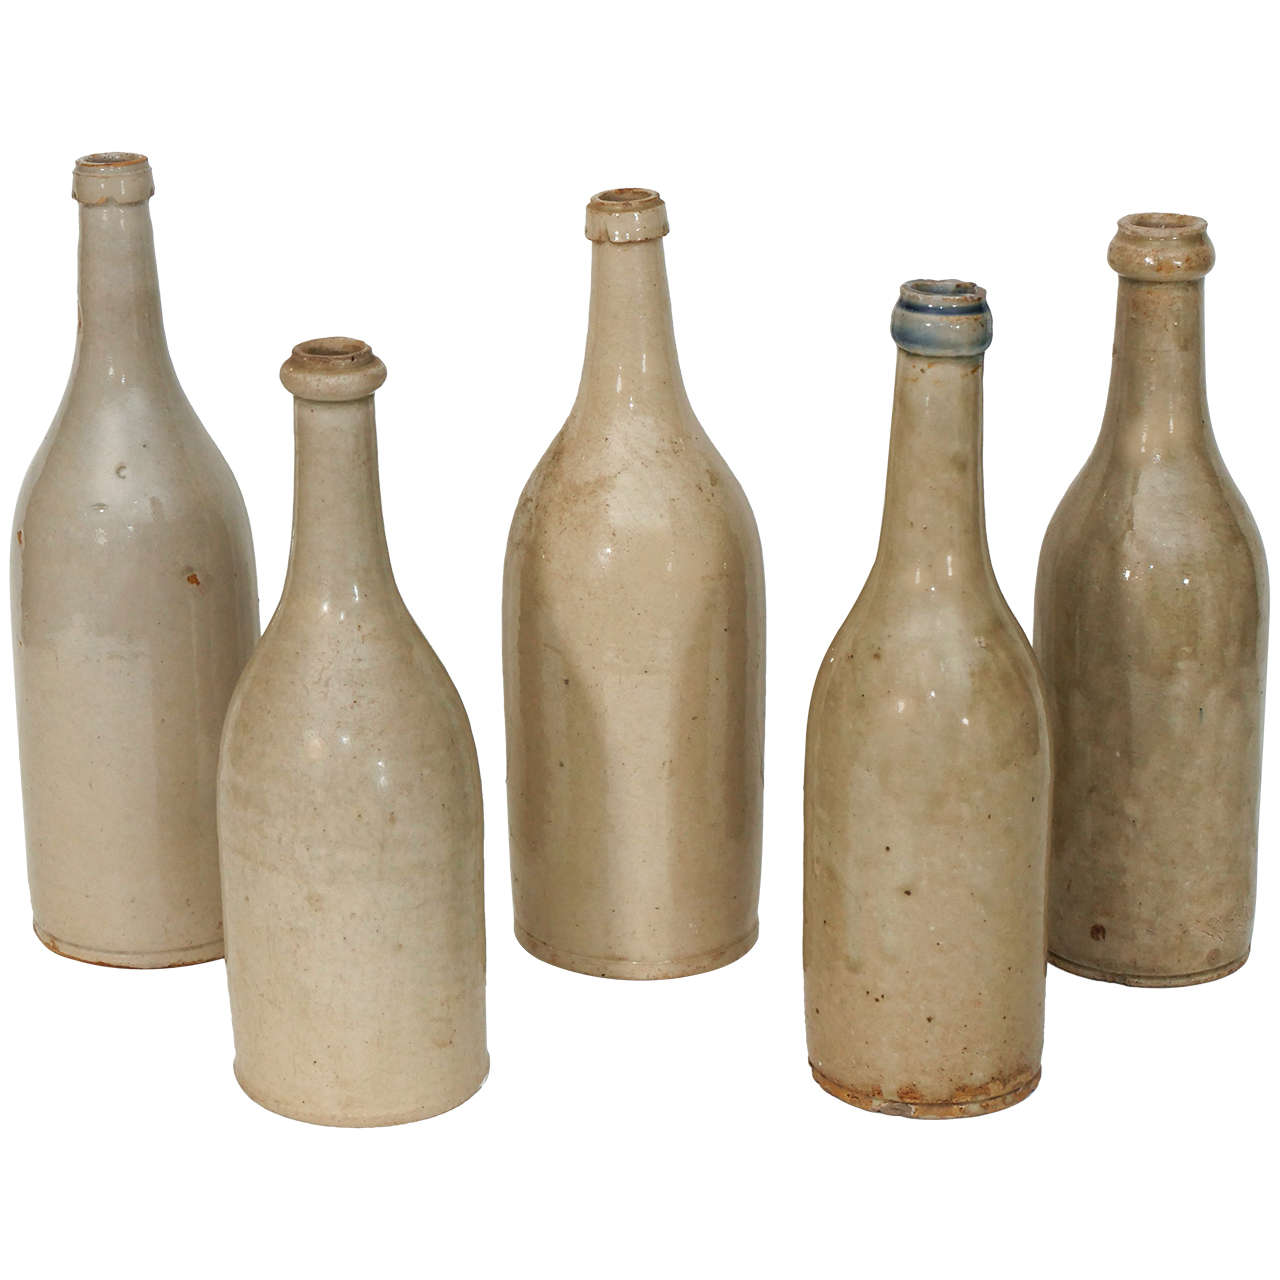 Ceramic Wine Bottles